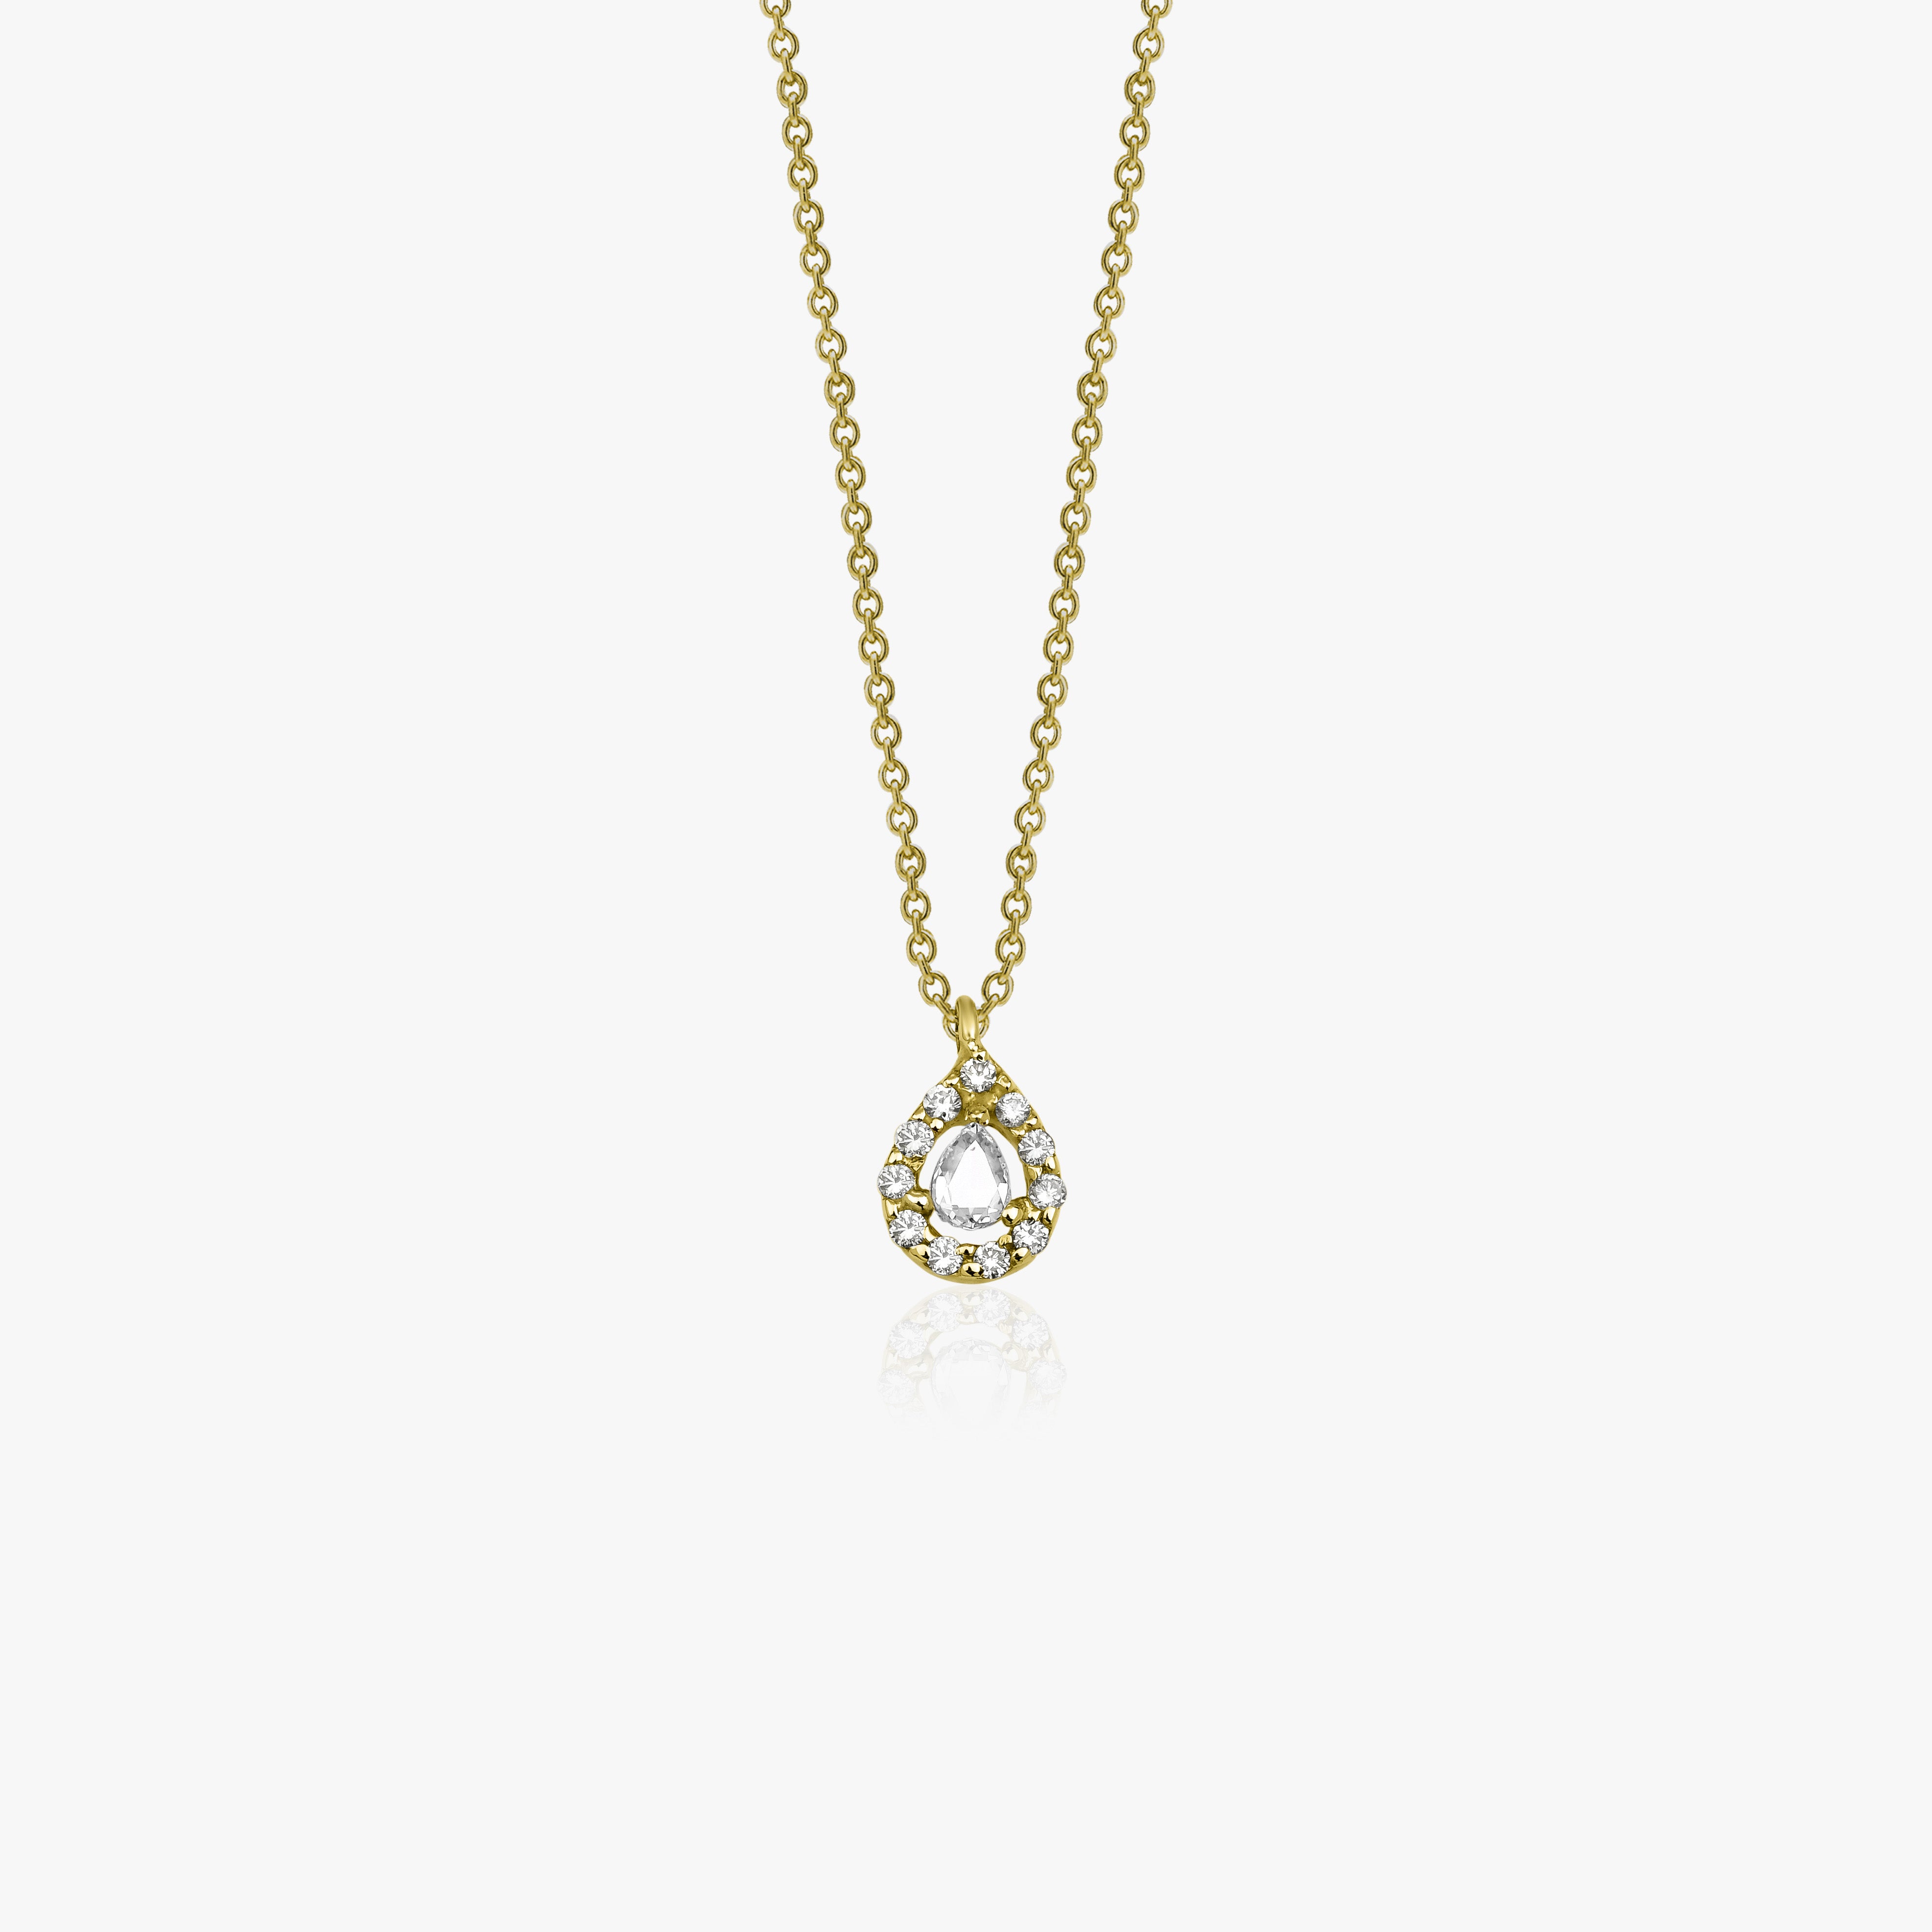 Rose Cut Diamond Necklace in 18K Gold